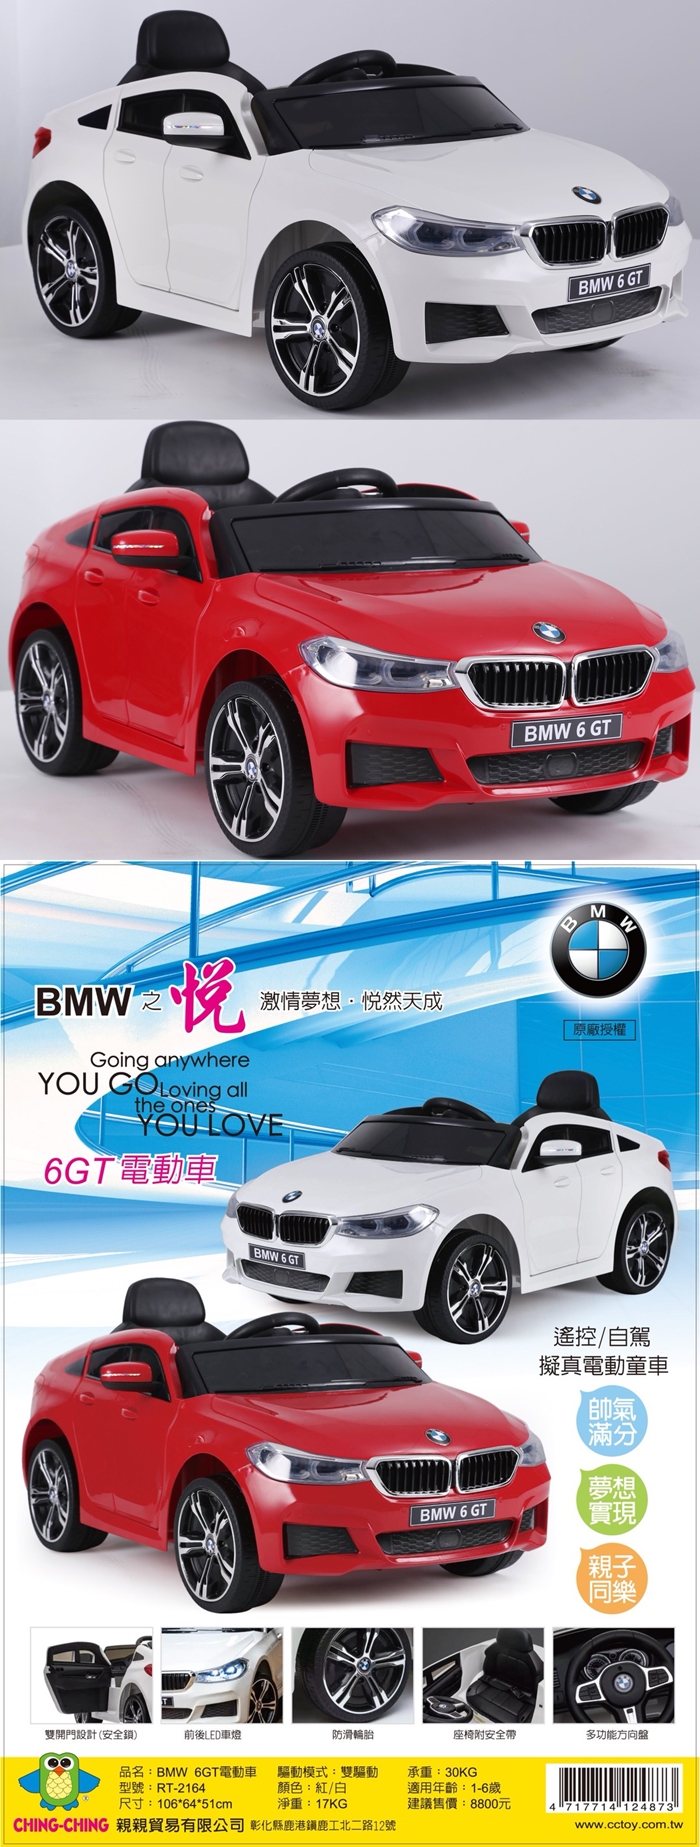 CHING-CHING親親-BMW 6GT(可遙控)兒童電動車(白色/紅色)RT-2164